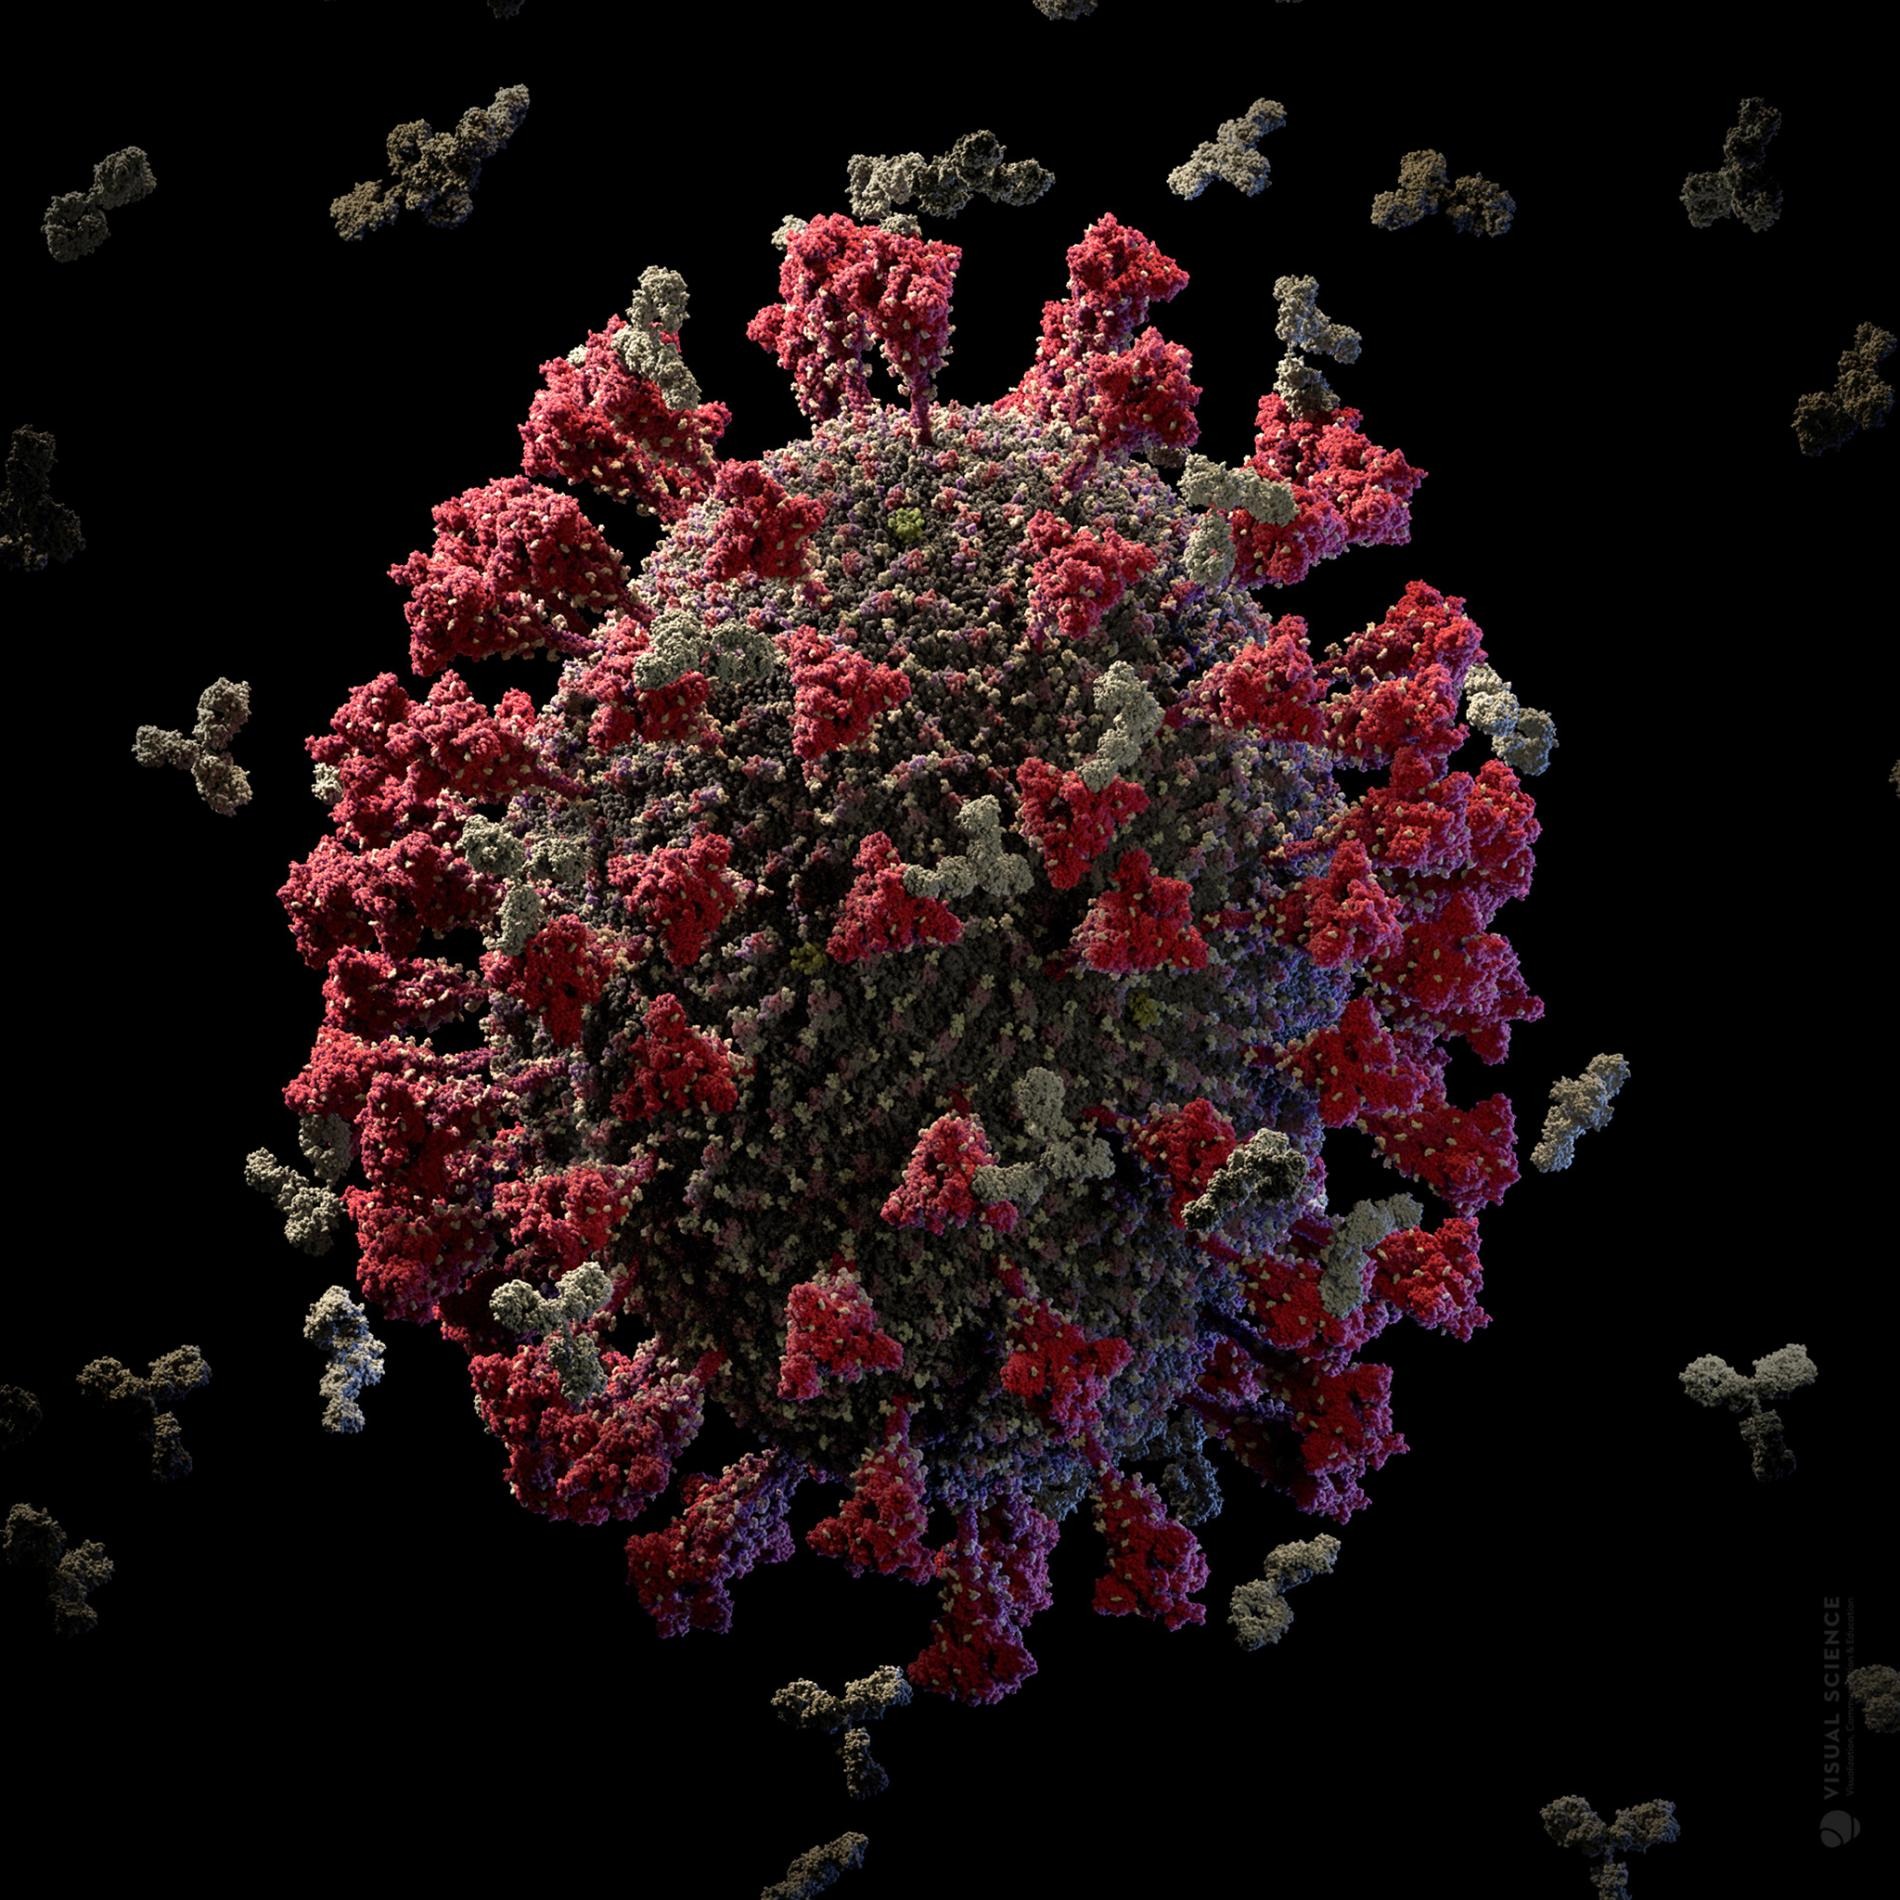 SARS-CoV-2病毒的表面覆蓋著棘蛋白（紅色）。莫德納的傳訊RNA（mRNA）疫苗會教導人體辨識這些棘蛋白，讓人體能生產一批中和抗體（白色），在冠狀病毒造成感染之前就阻止它。MODEL AT ATOMIC RESOLUTION IN BY VISUAL SCIENCE